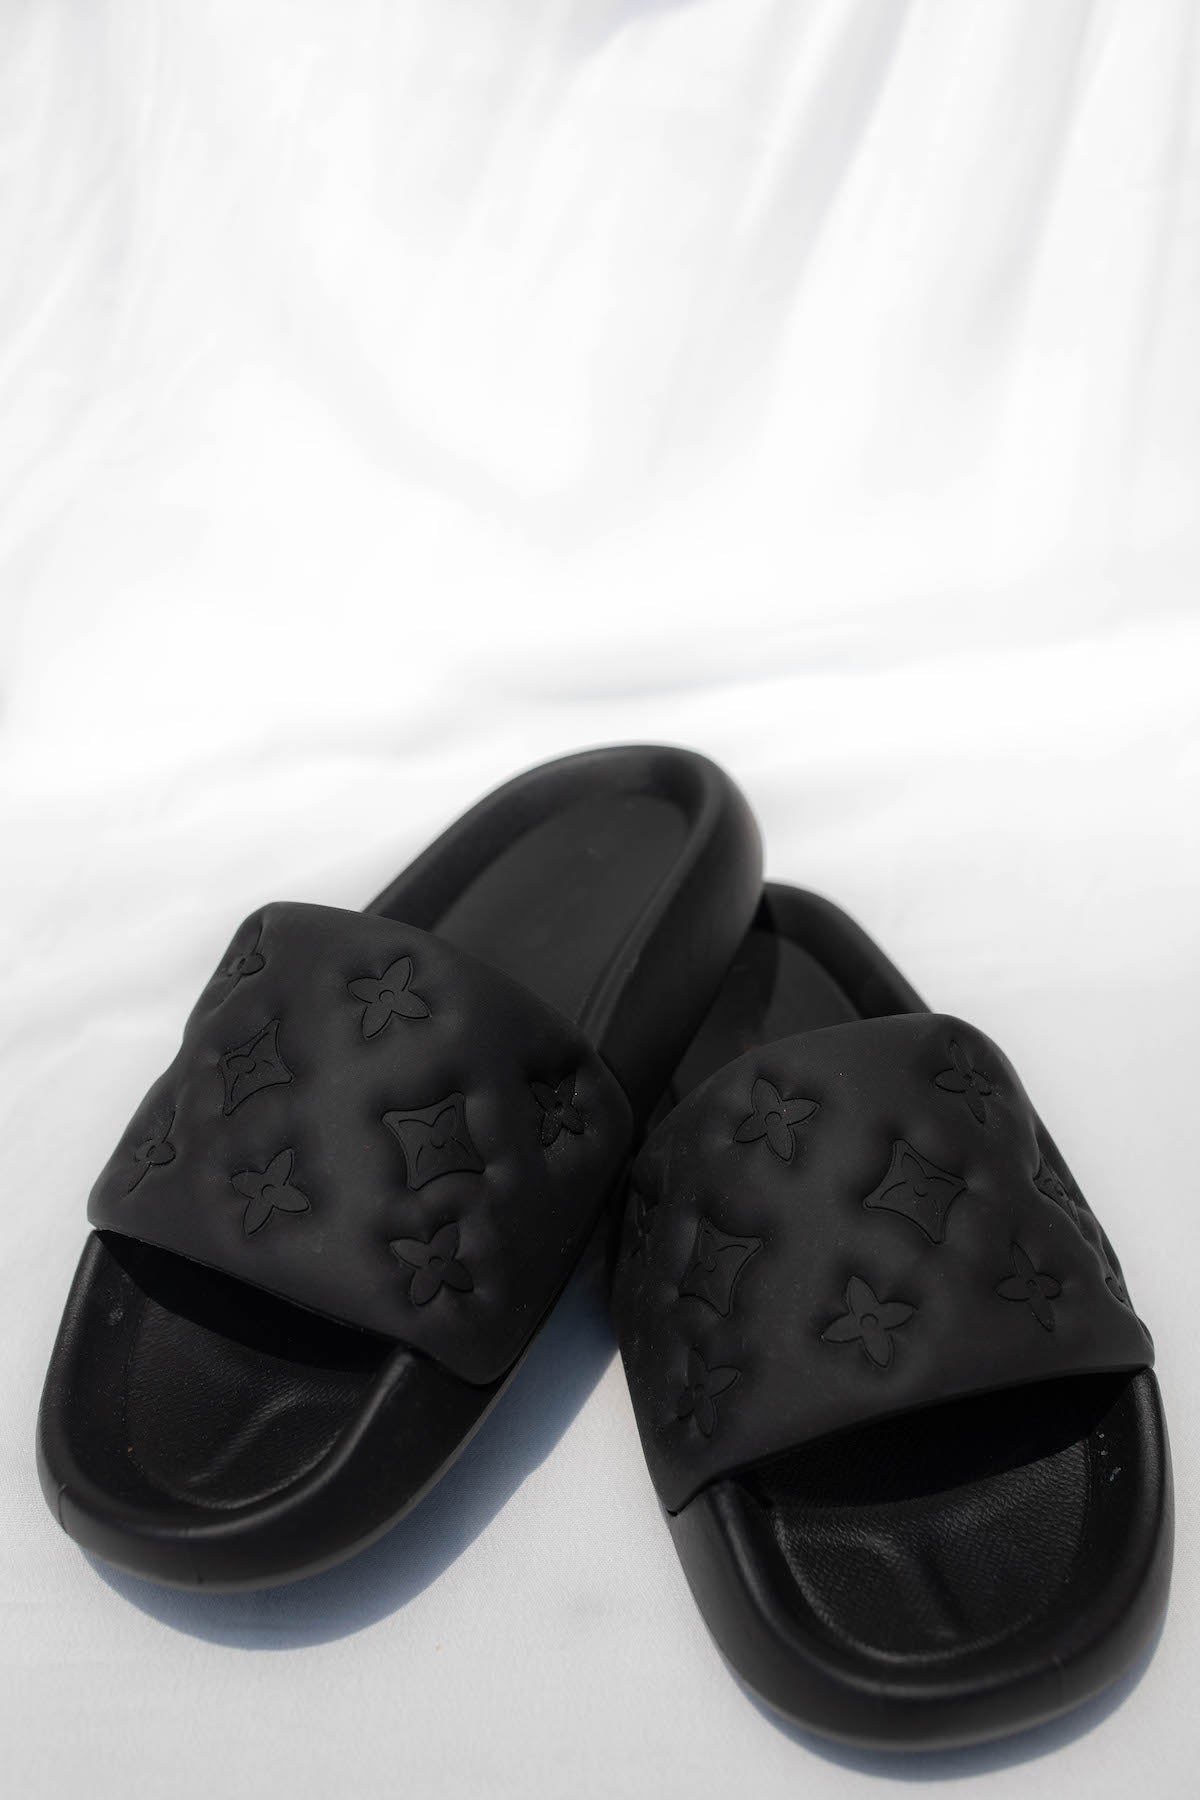 Louis Vuitton Blue Leather Embellished Buckle Strap Slide Sandals